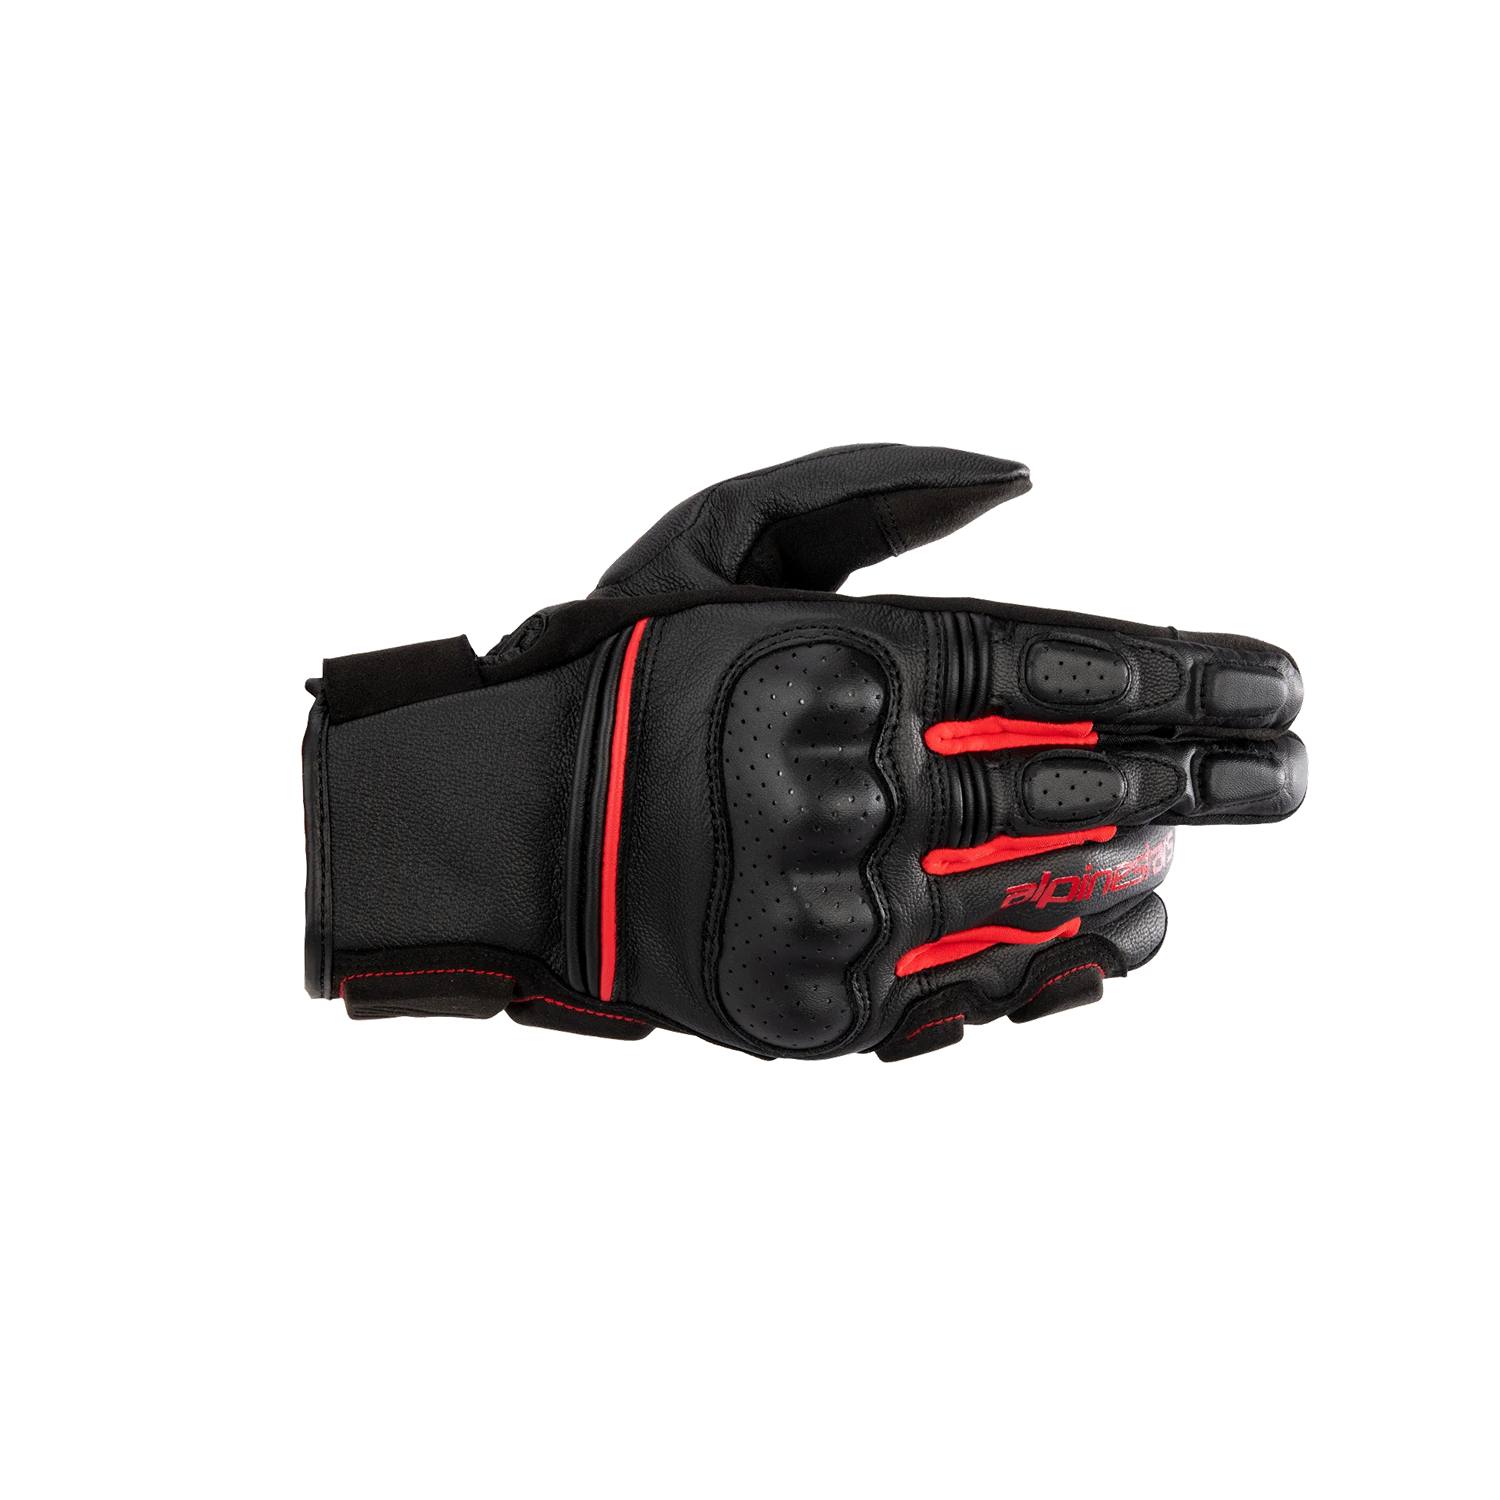 Image of Alpinestars Phenom Leather Gloves Black Bright Red Size S ID 8059347167695